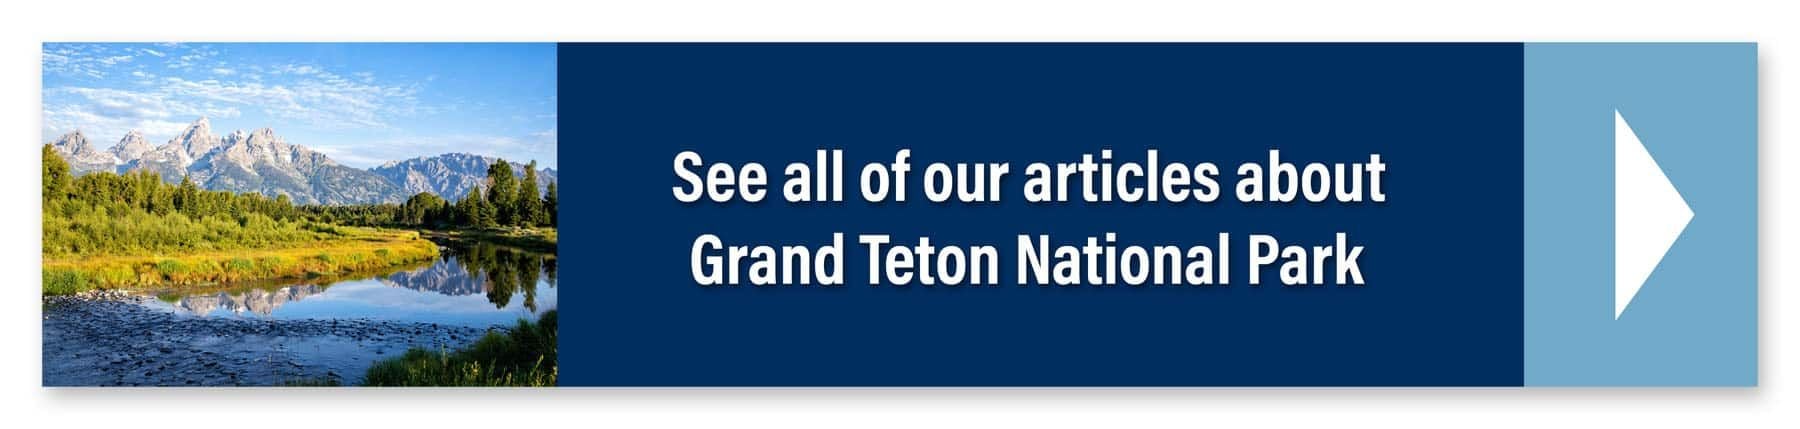 Grand Teton Travel Guide